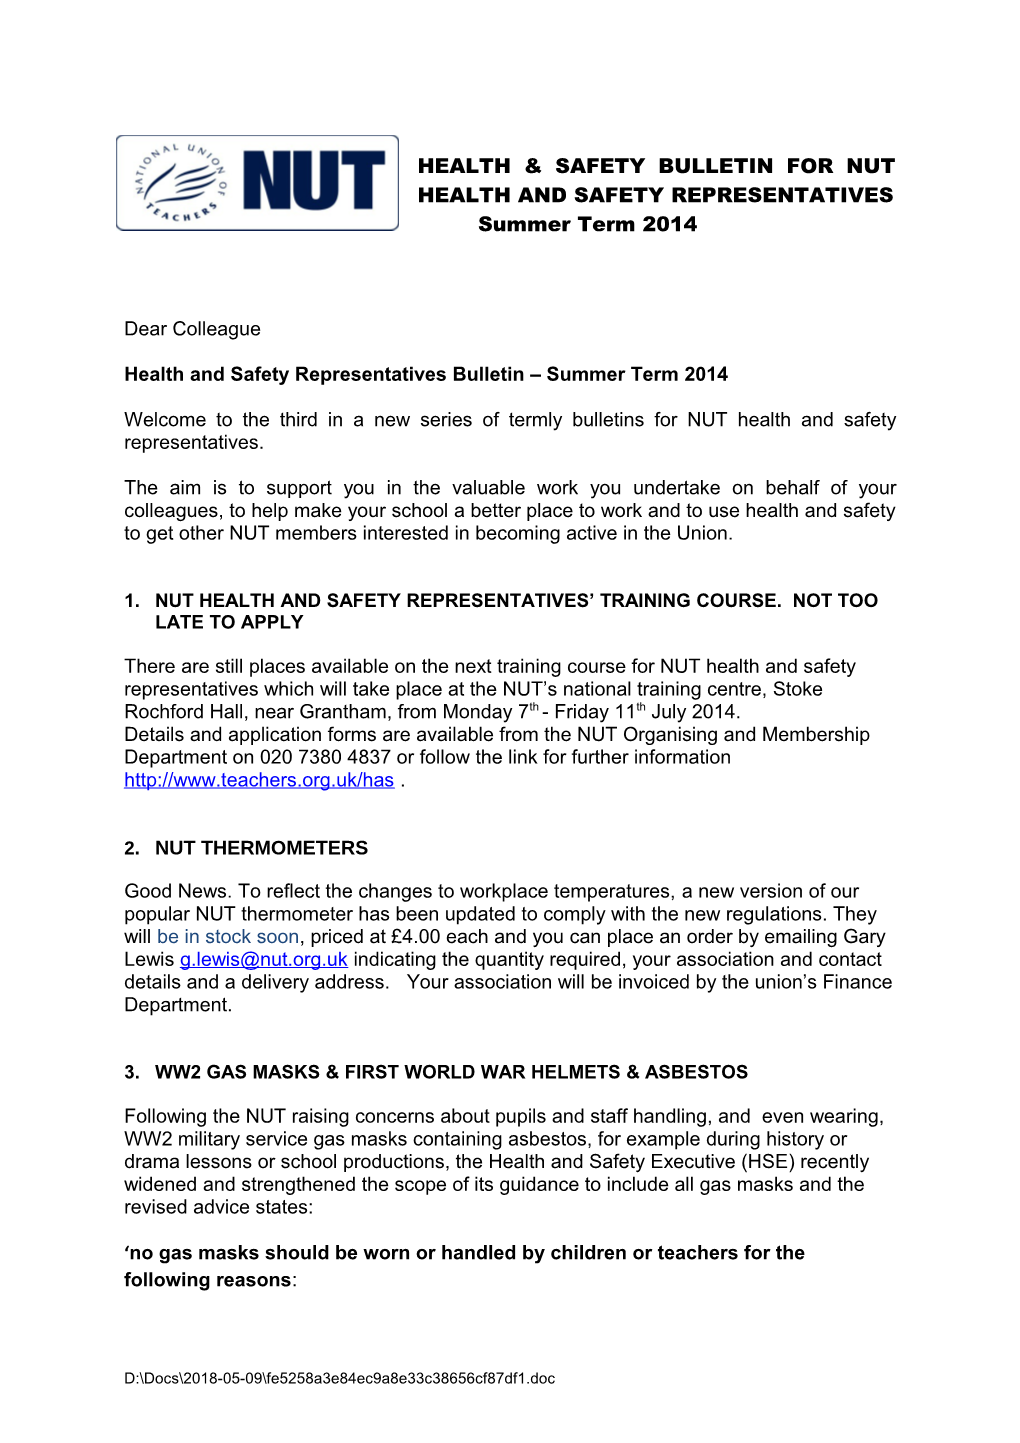 Health and Safety Representatives Bulletin Summer Term 2014